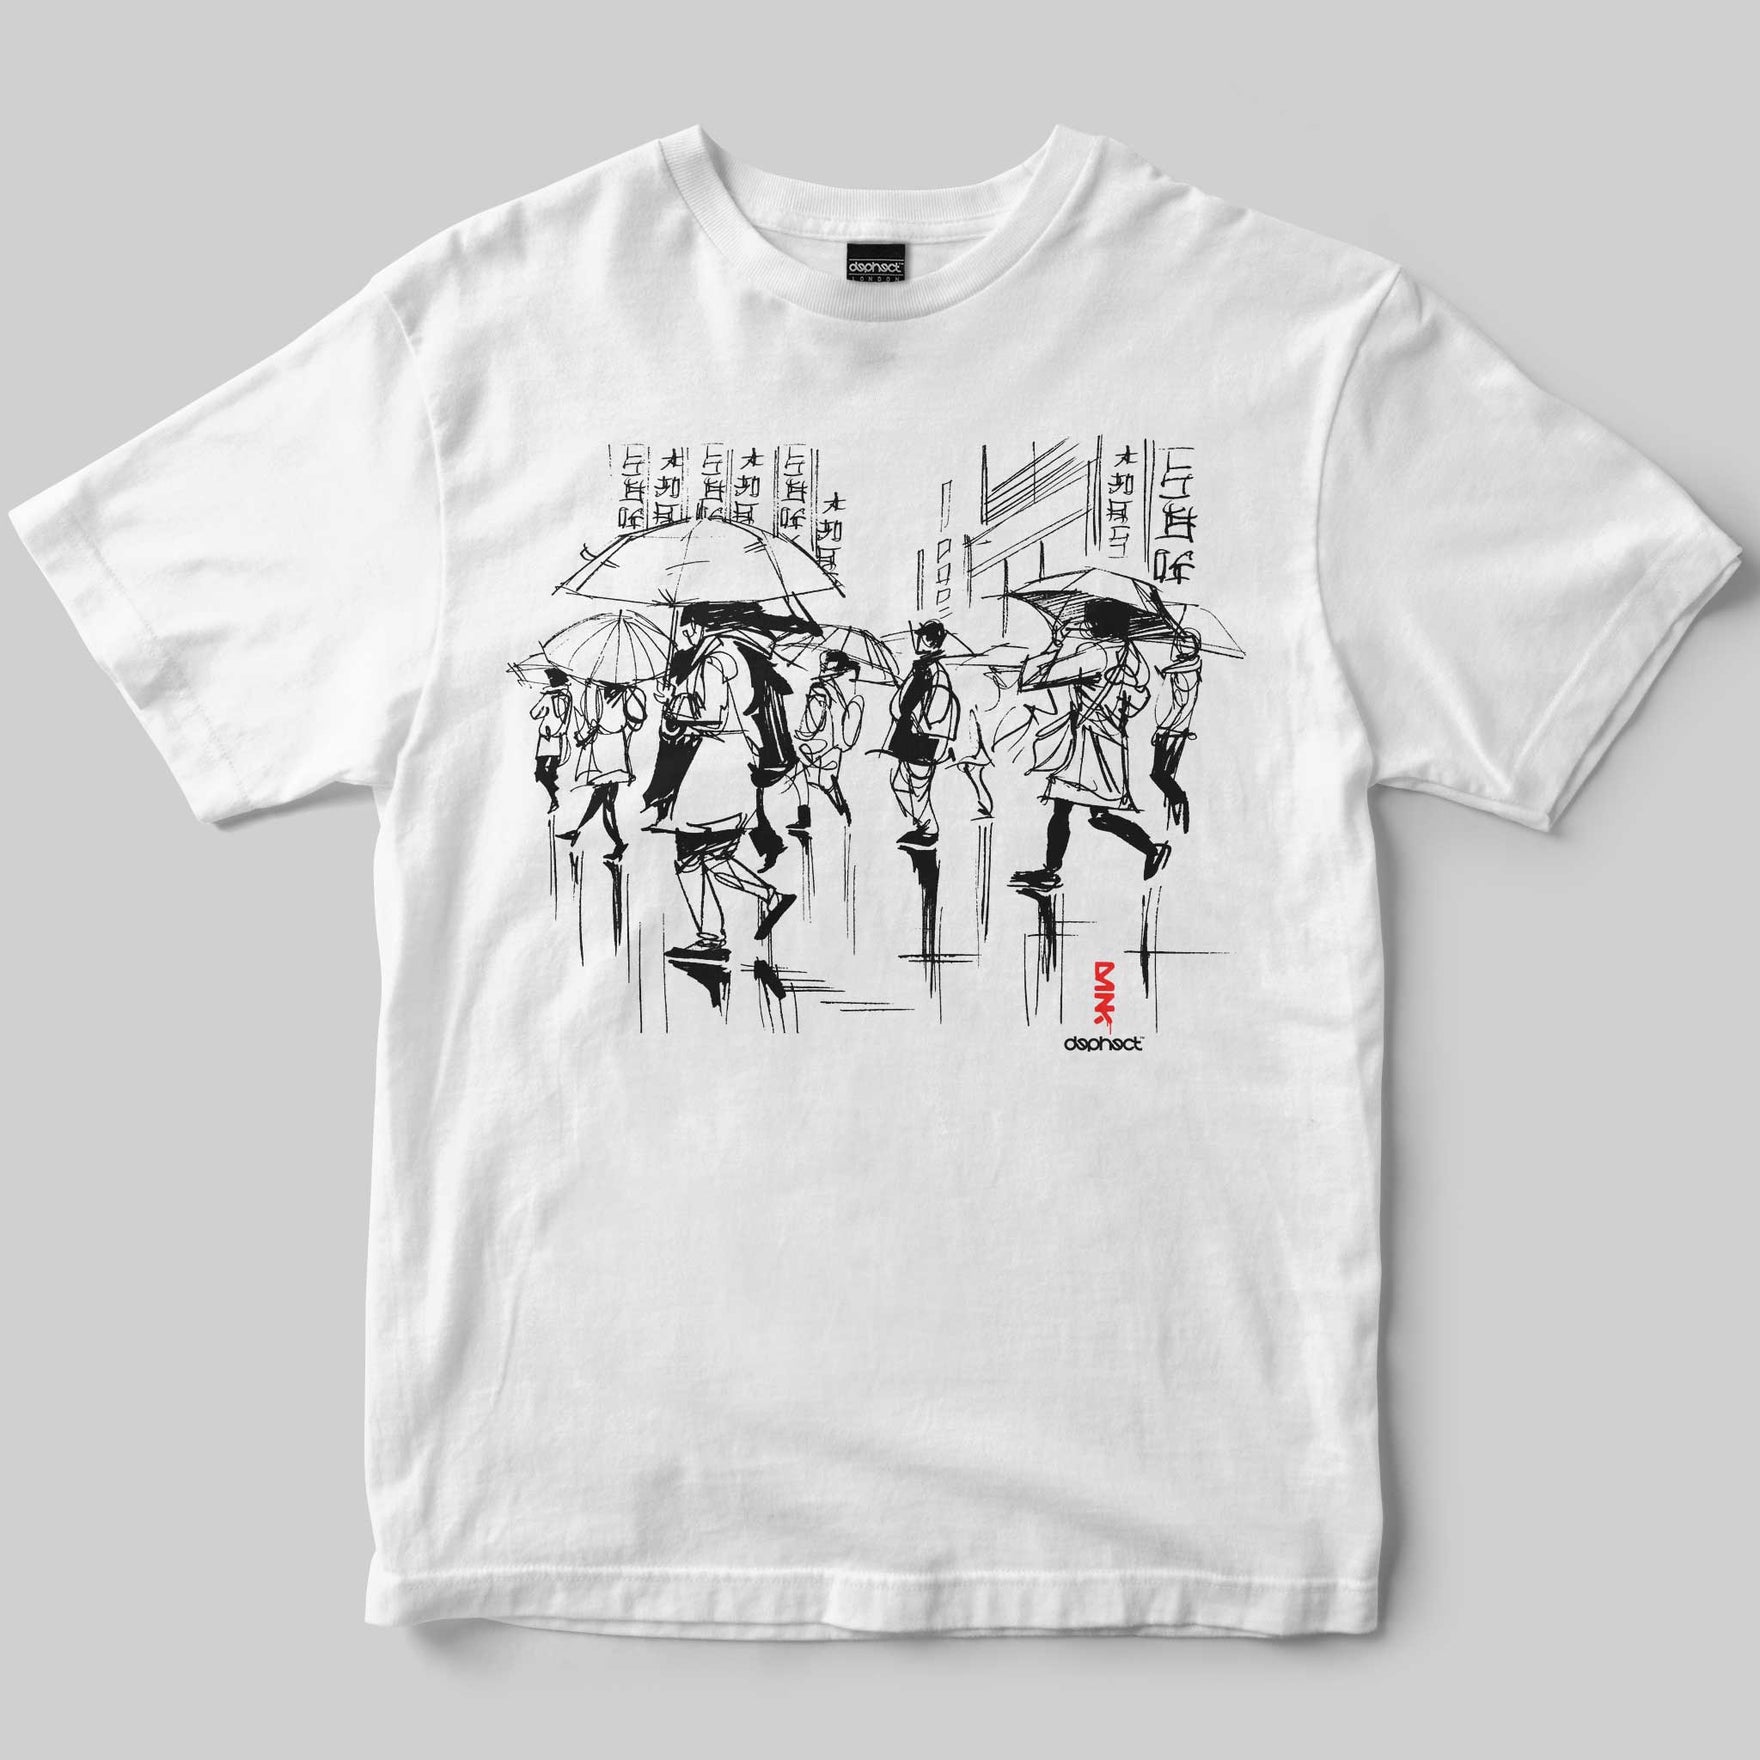 Tokyo Walk T-Shirt / White / by Dan Kitchener